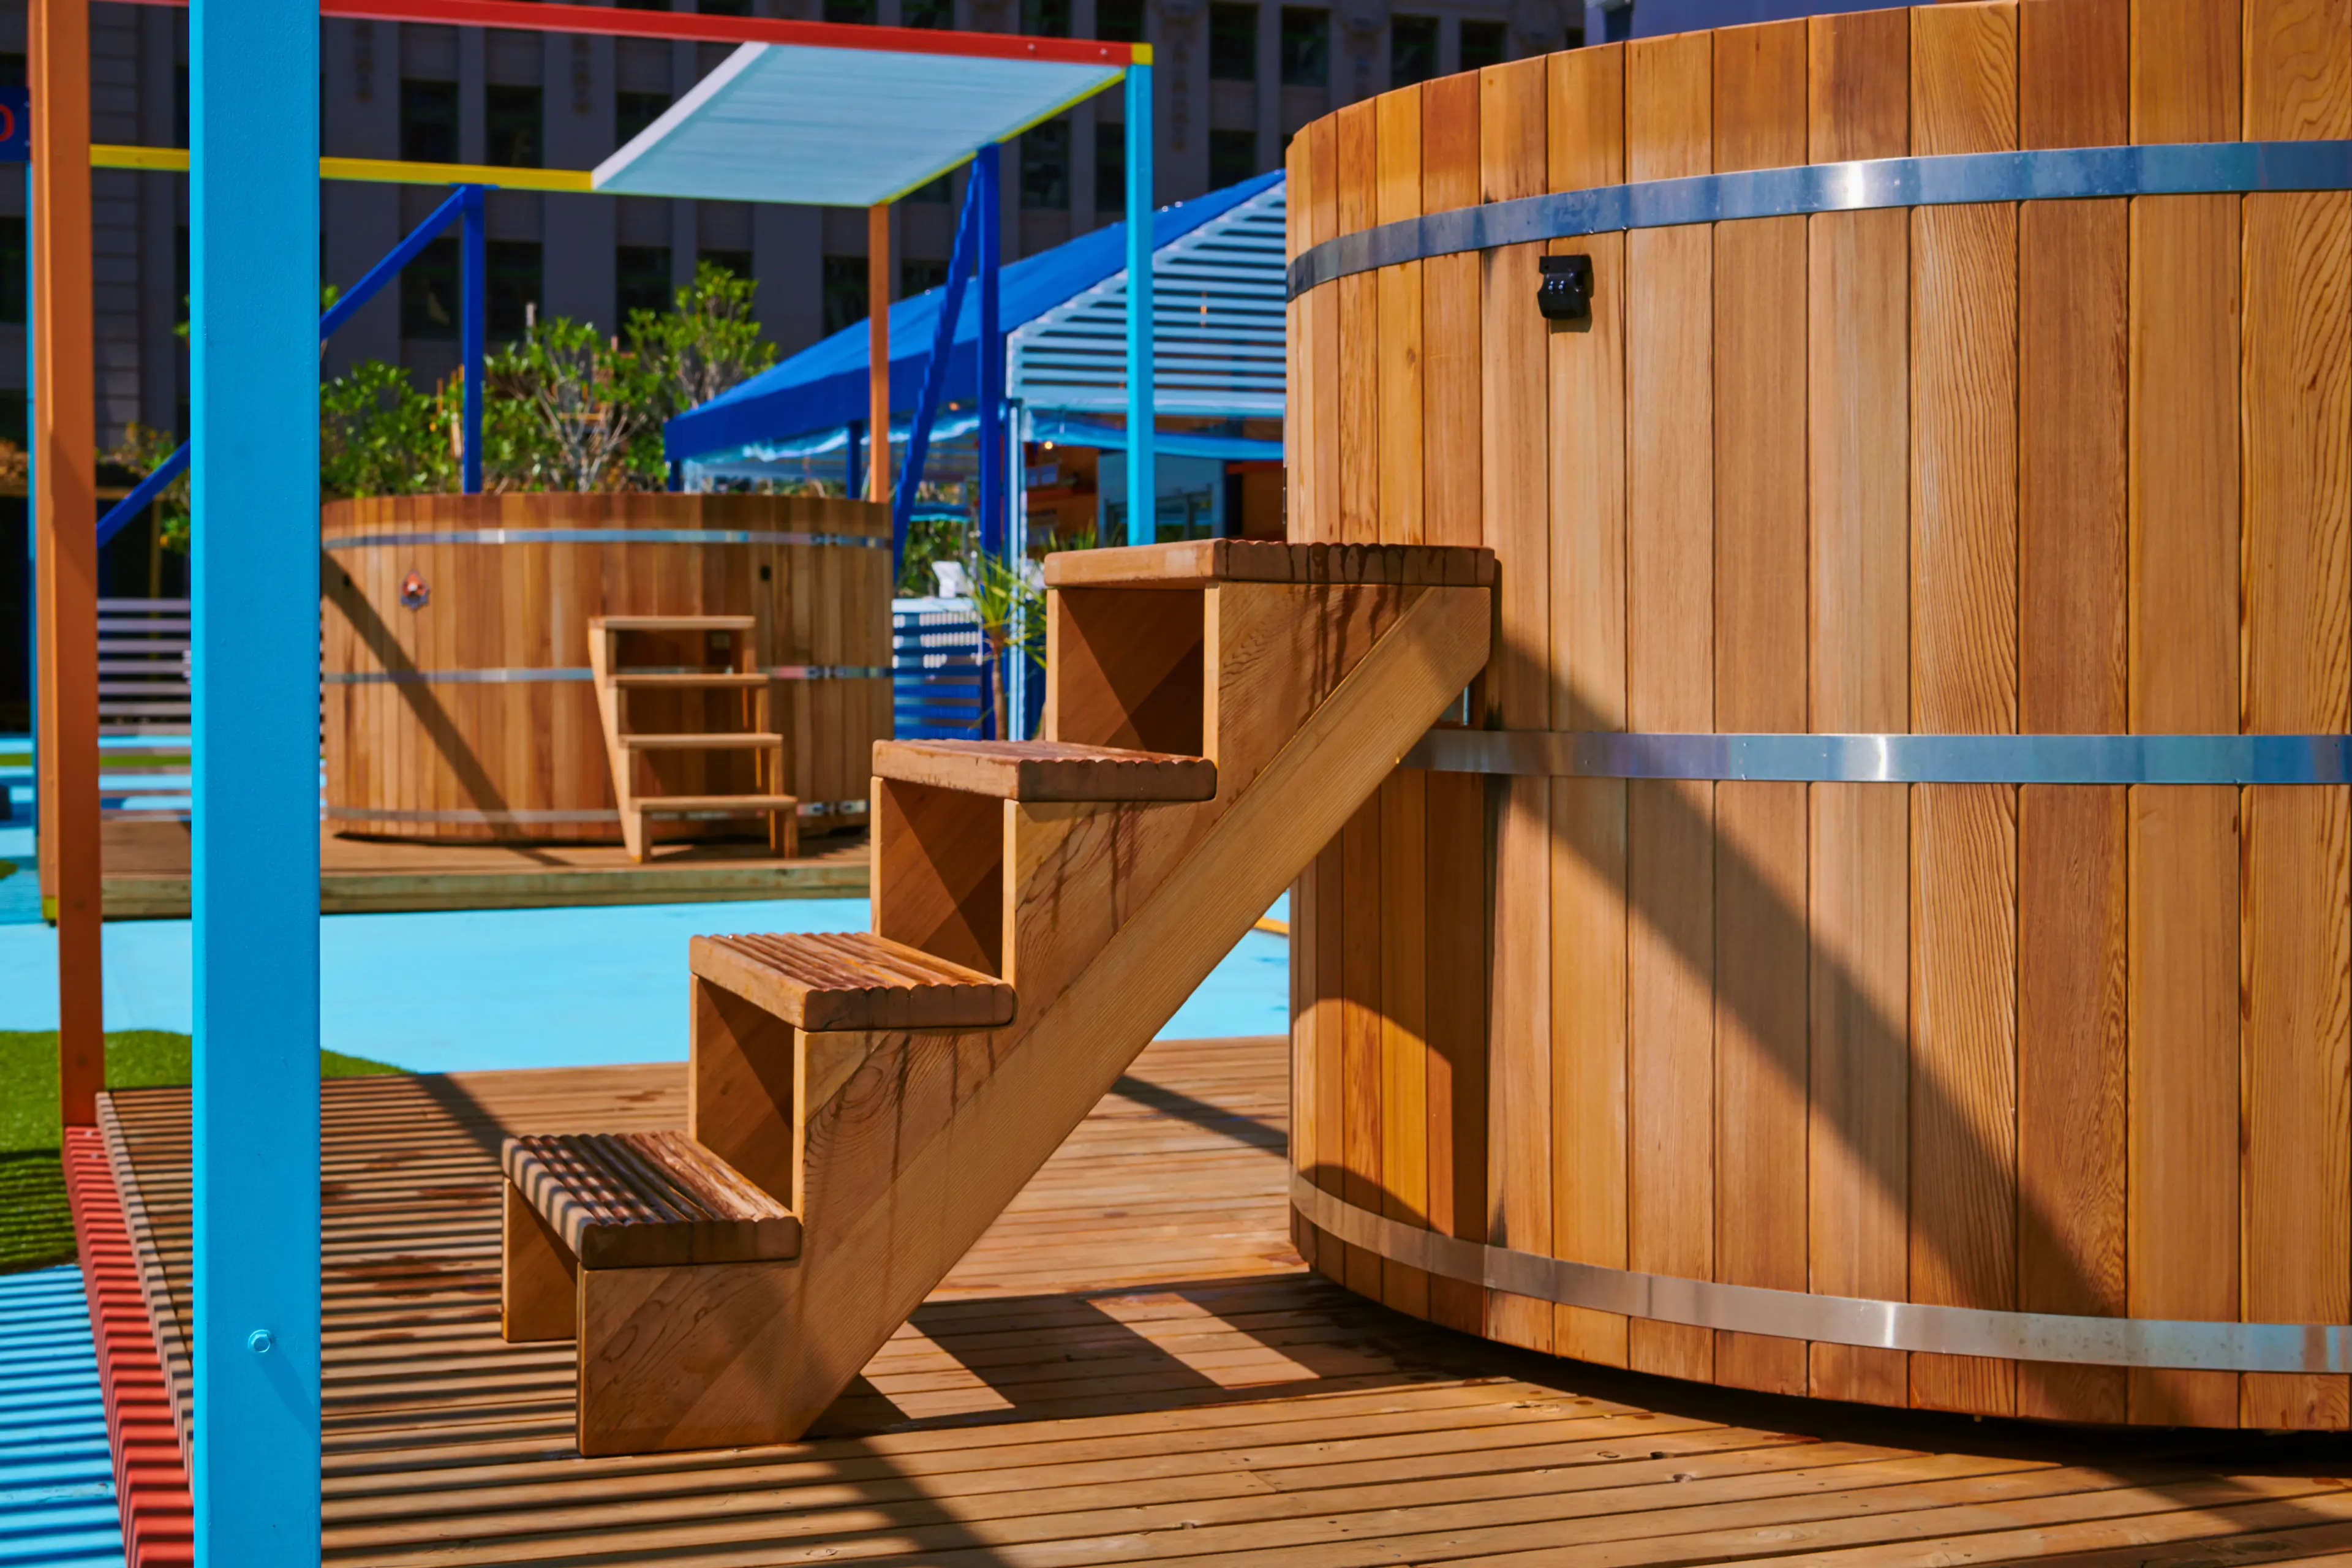 Reunion Island Pool Club - hospitality interior design, build and fitout, production - Melbourne, Australia